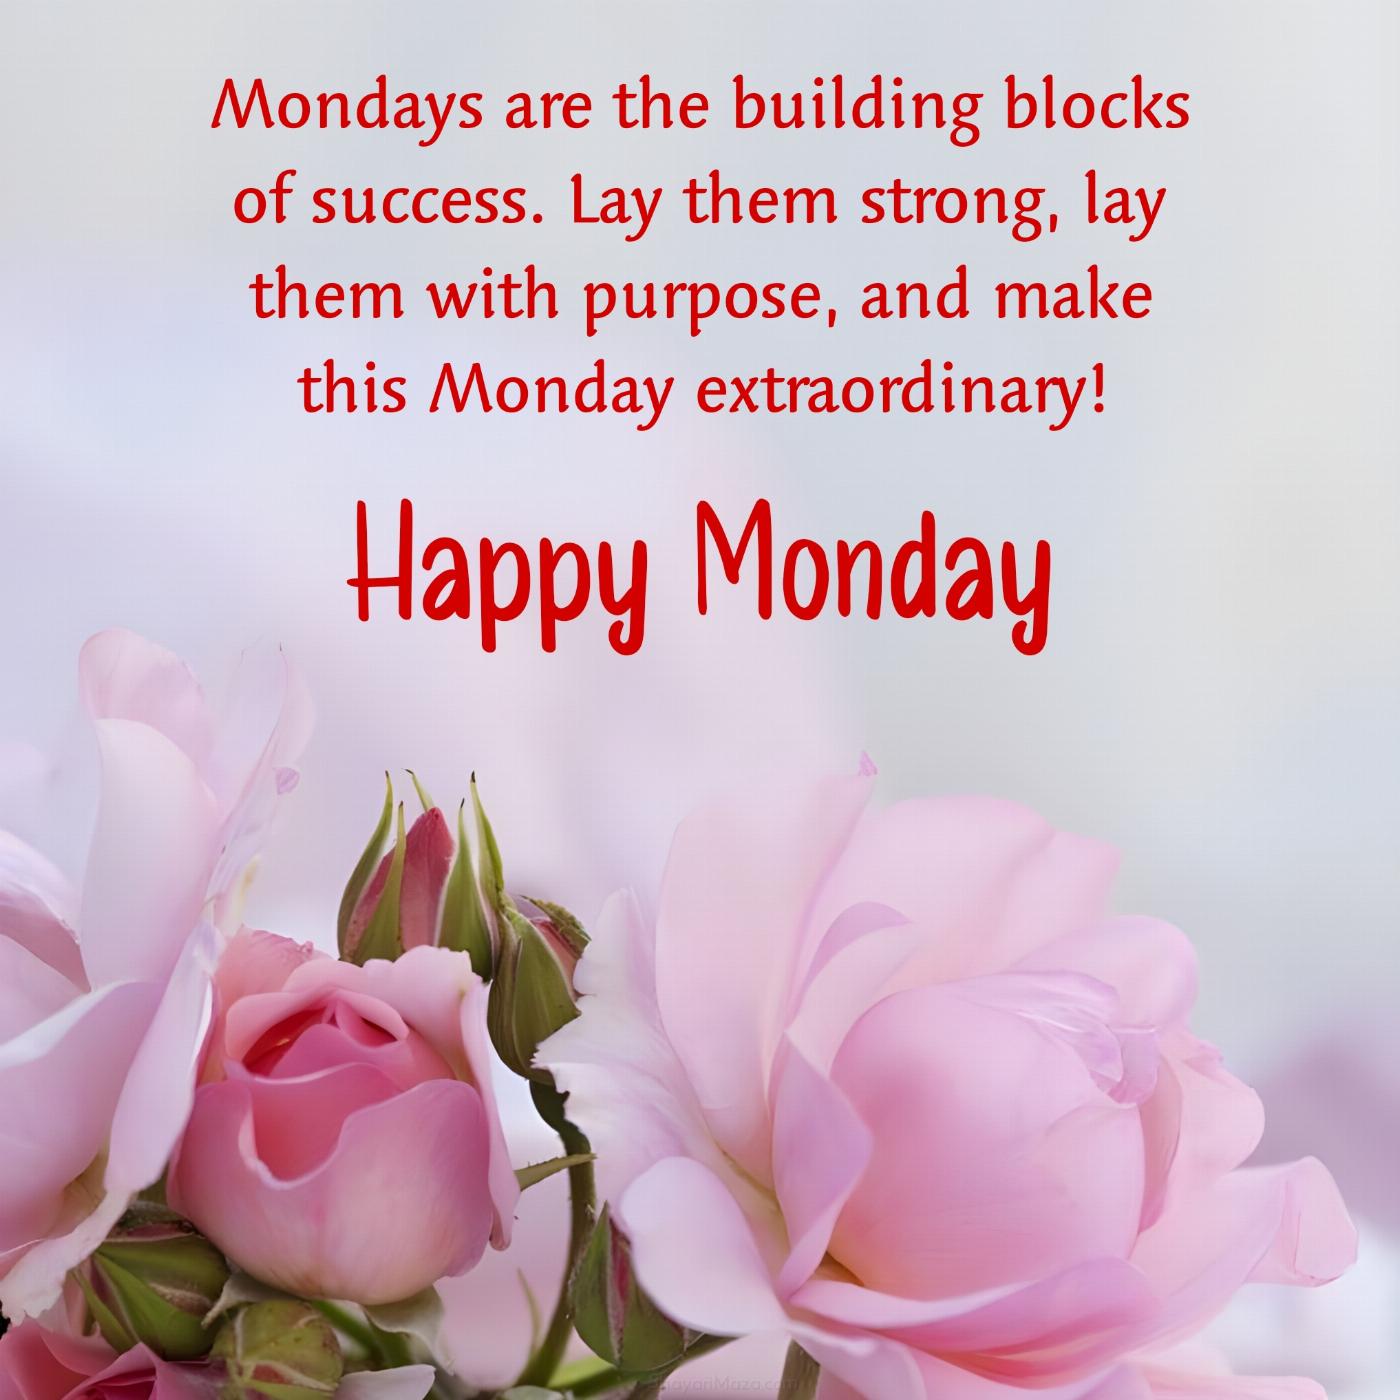 Mondays are the building blocks of success